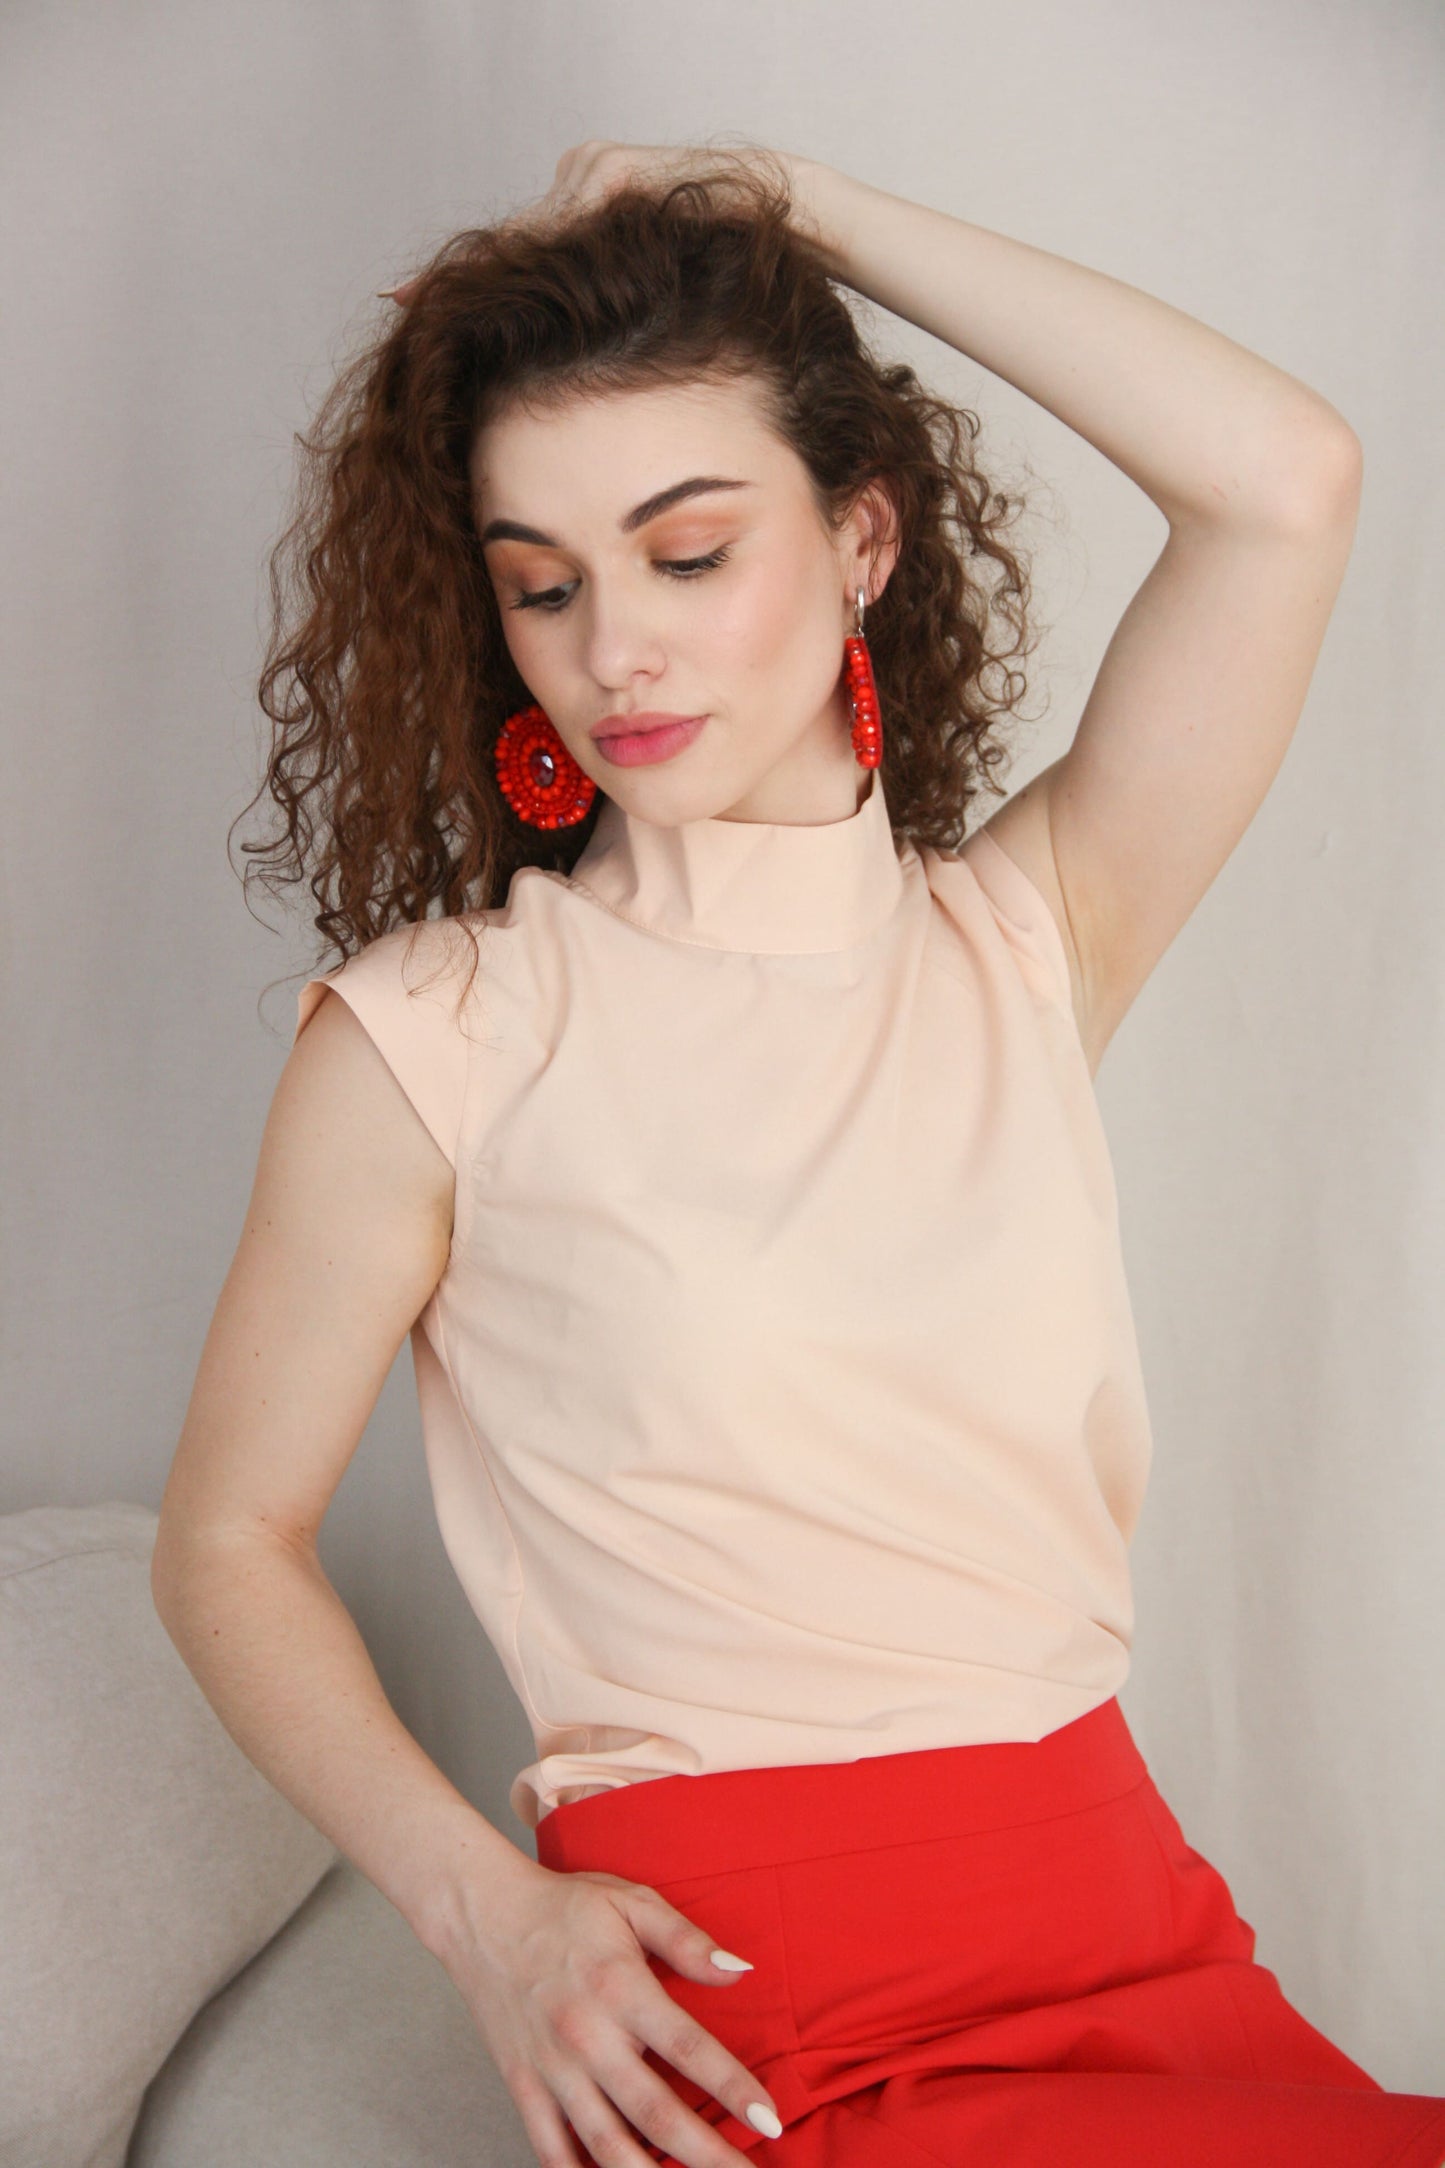 Light Peach Short Sleeve Blouse With Red Mini Skirt